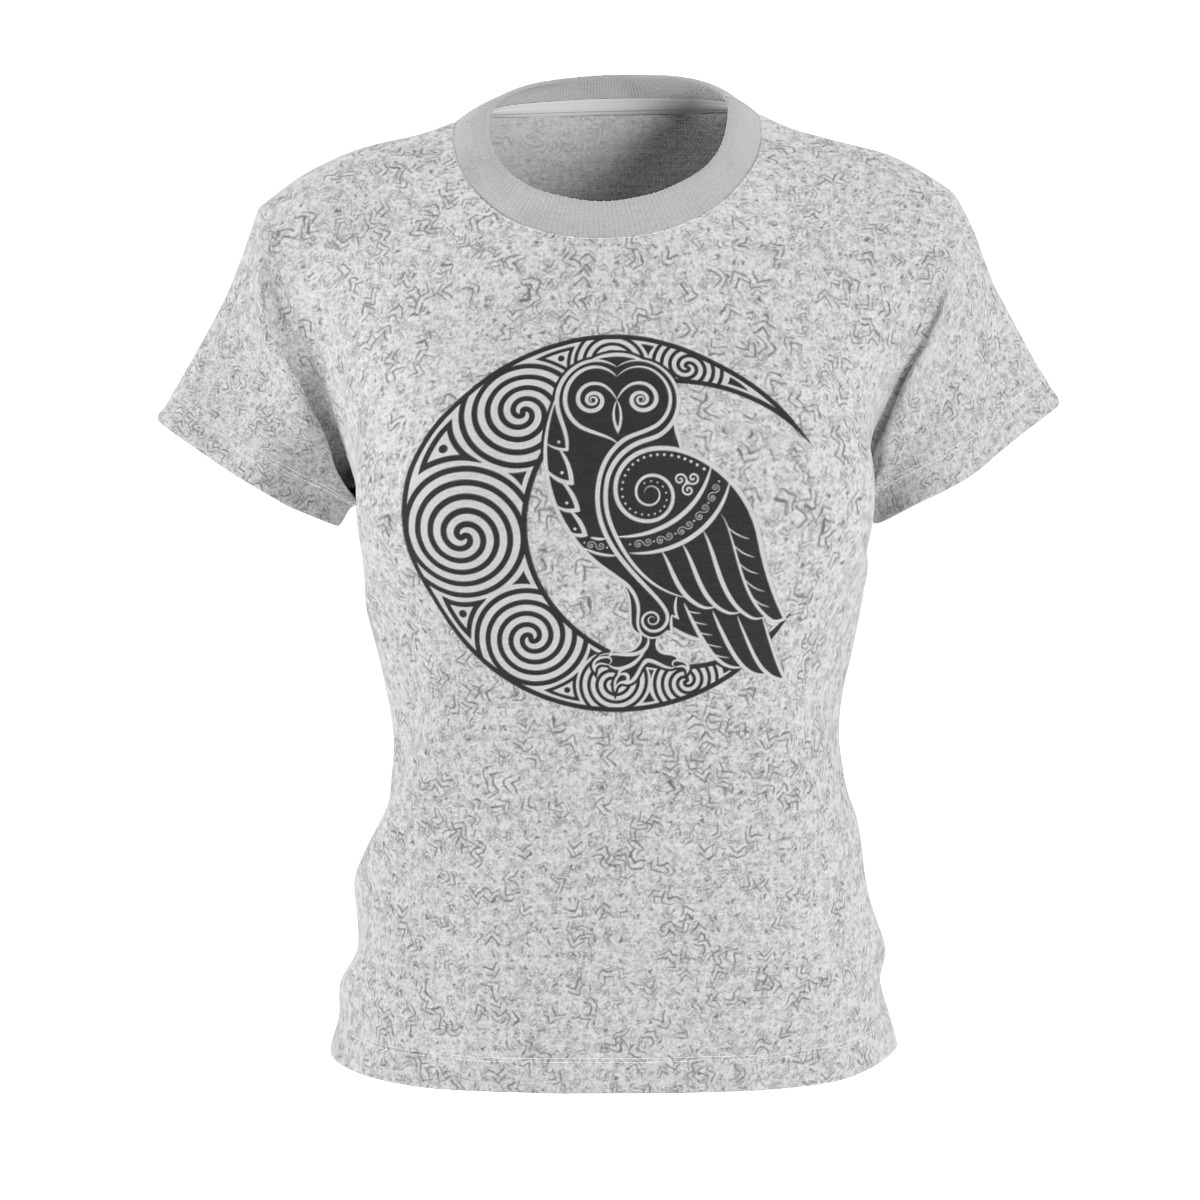 Gray Owl Crescent Moon Women’s All Over Print Tee